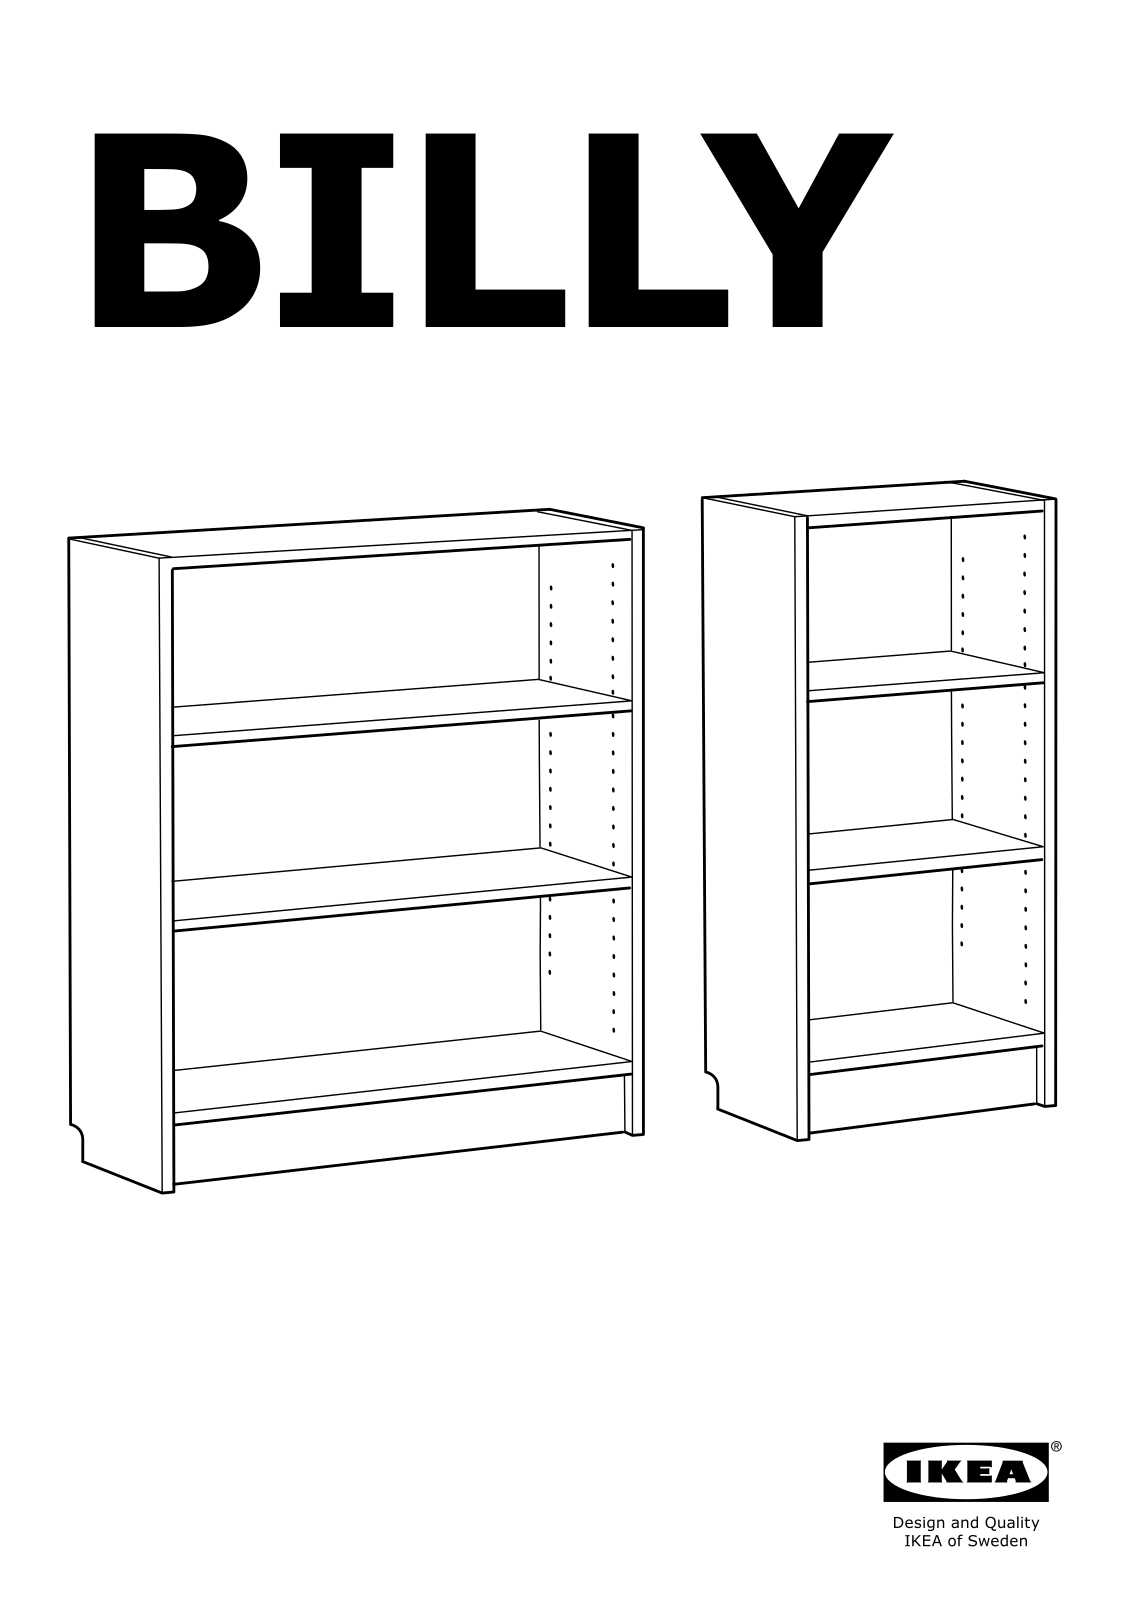 IKEA BILLY 240-28-106 User Manual